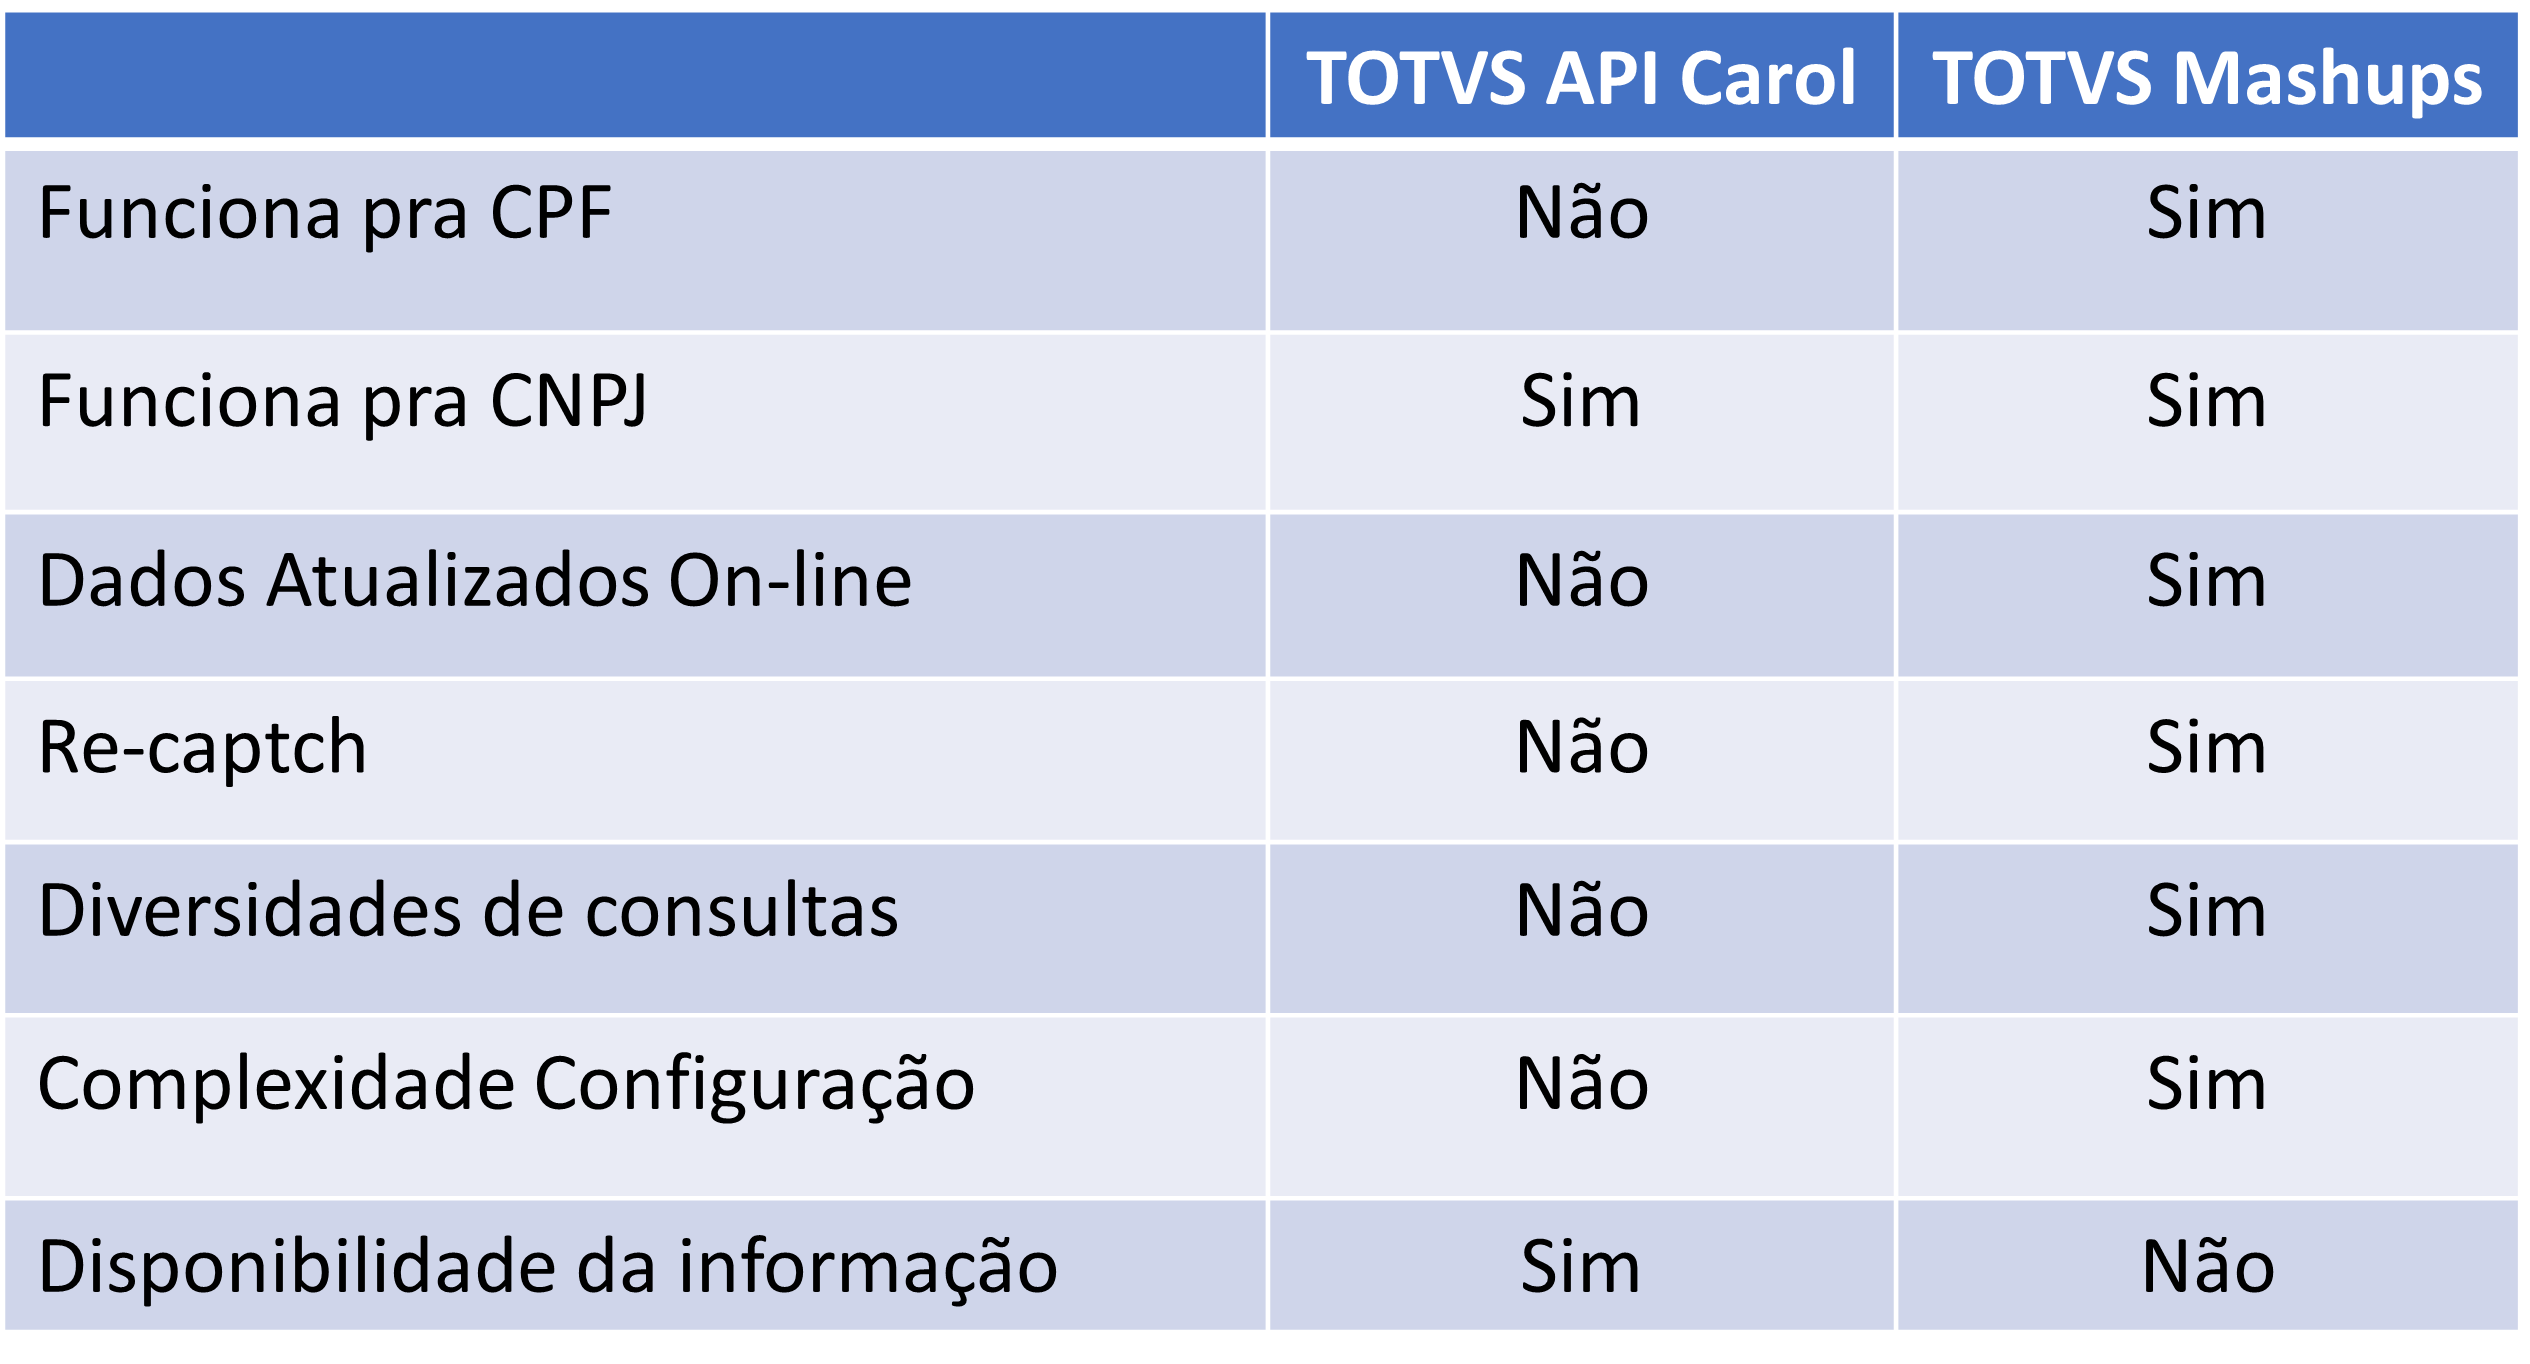 TOTVS API Carol x Mashups